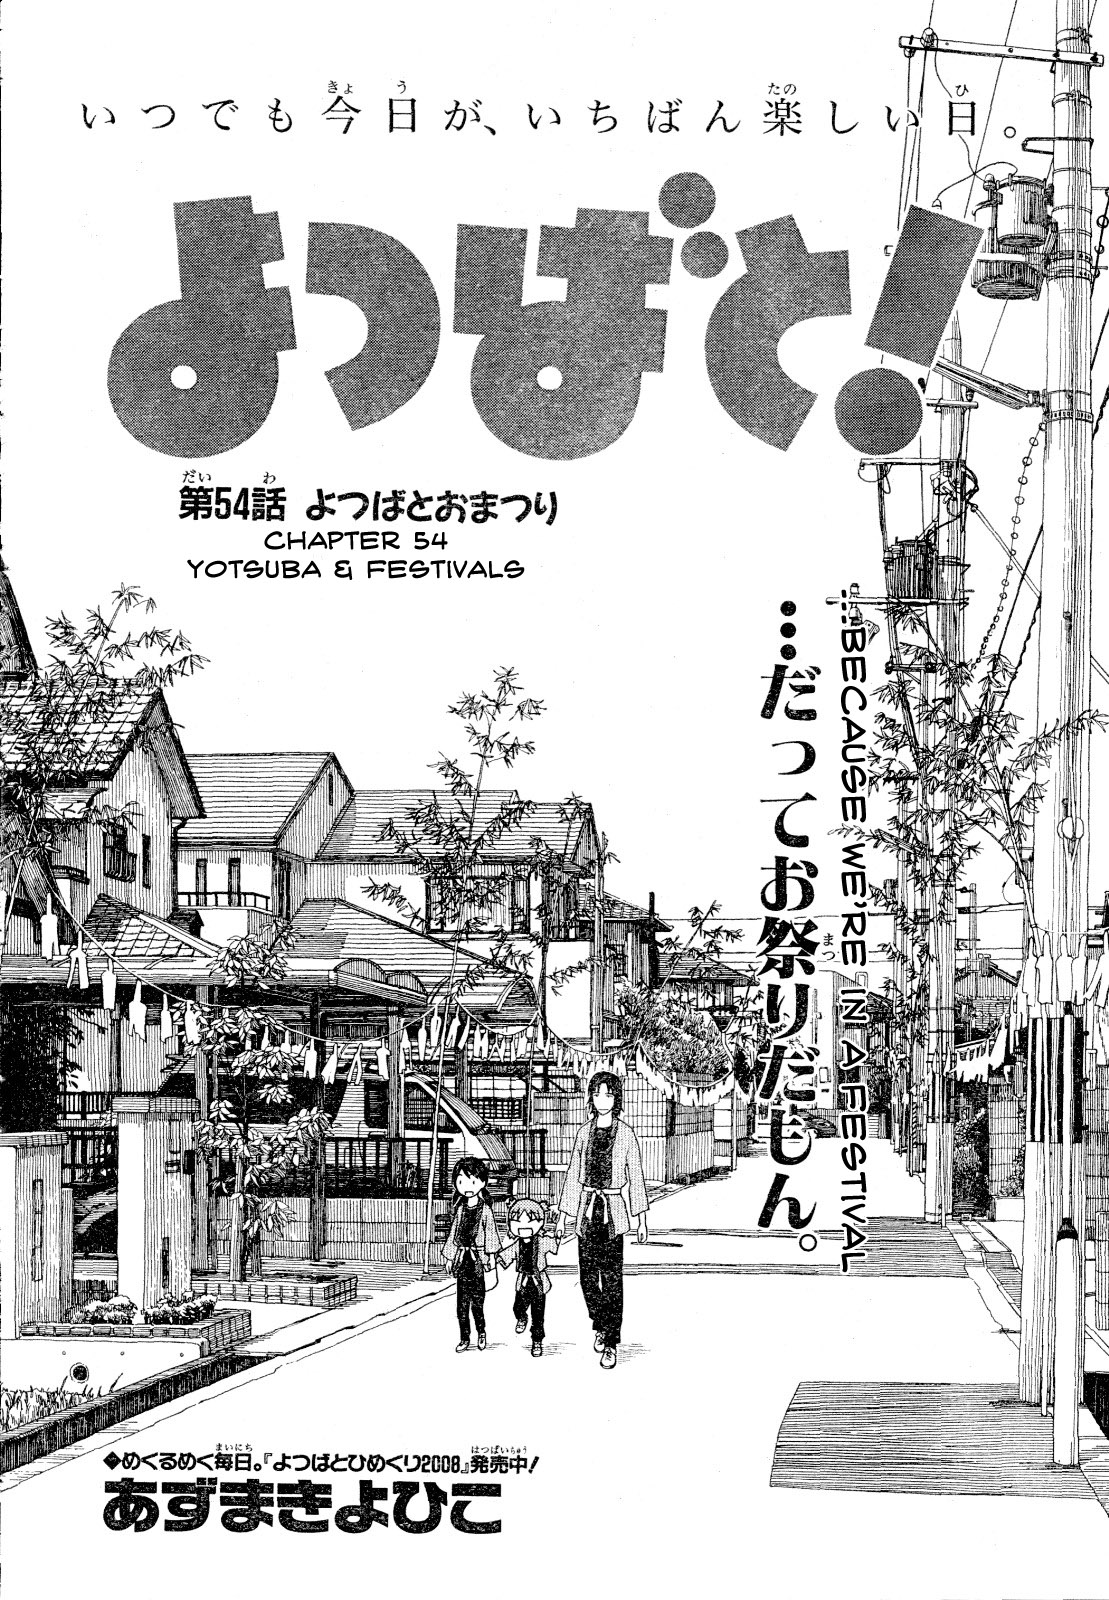 Yotsuba to! Vol. 8 Ch. 54 Yotsuba & Festivals (1)